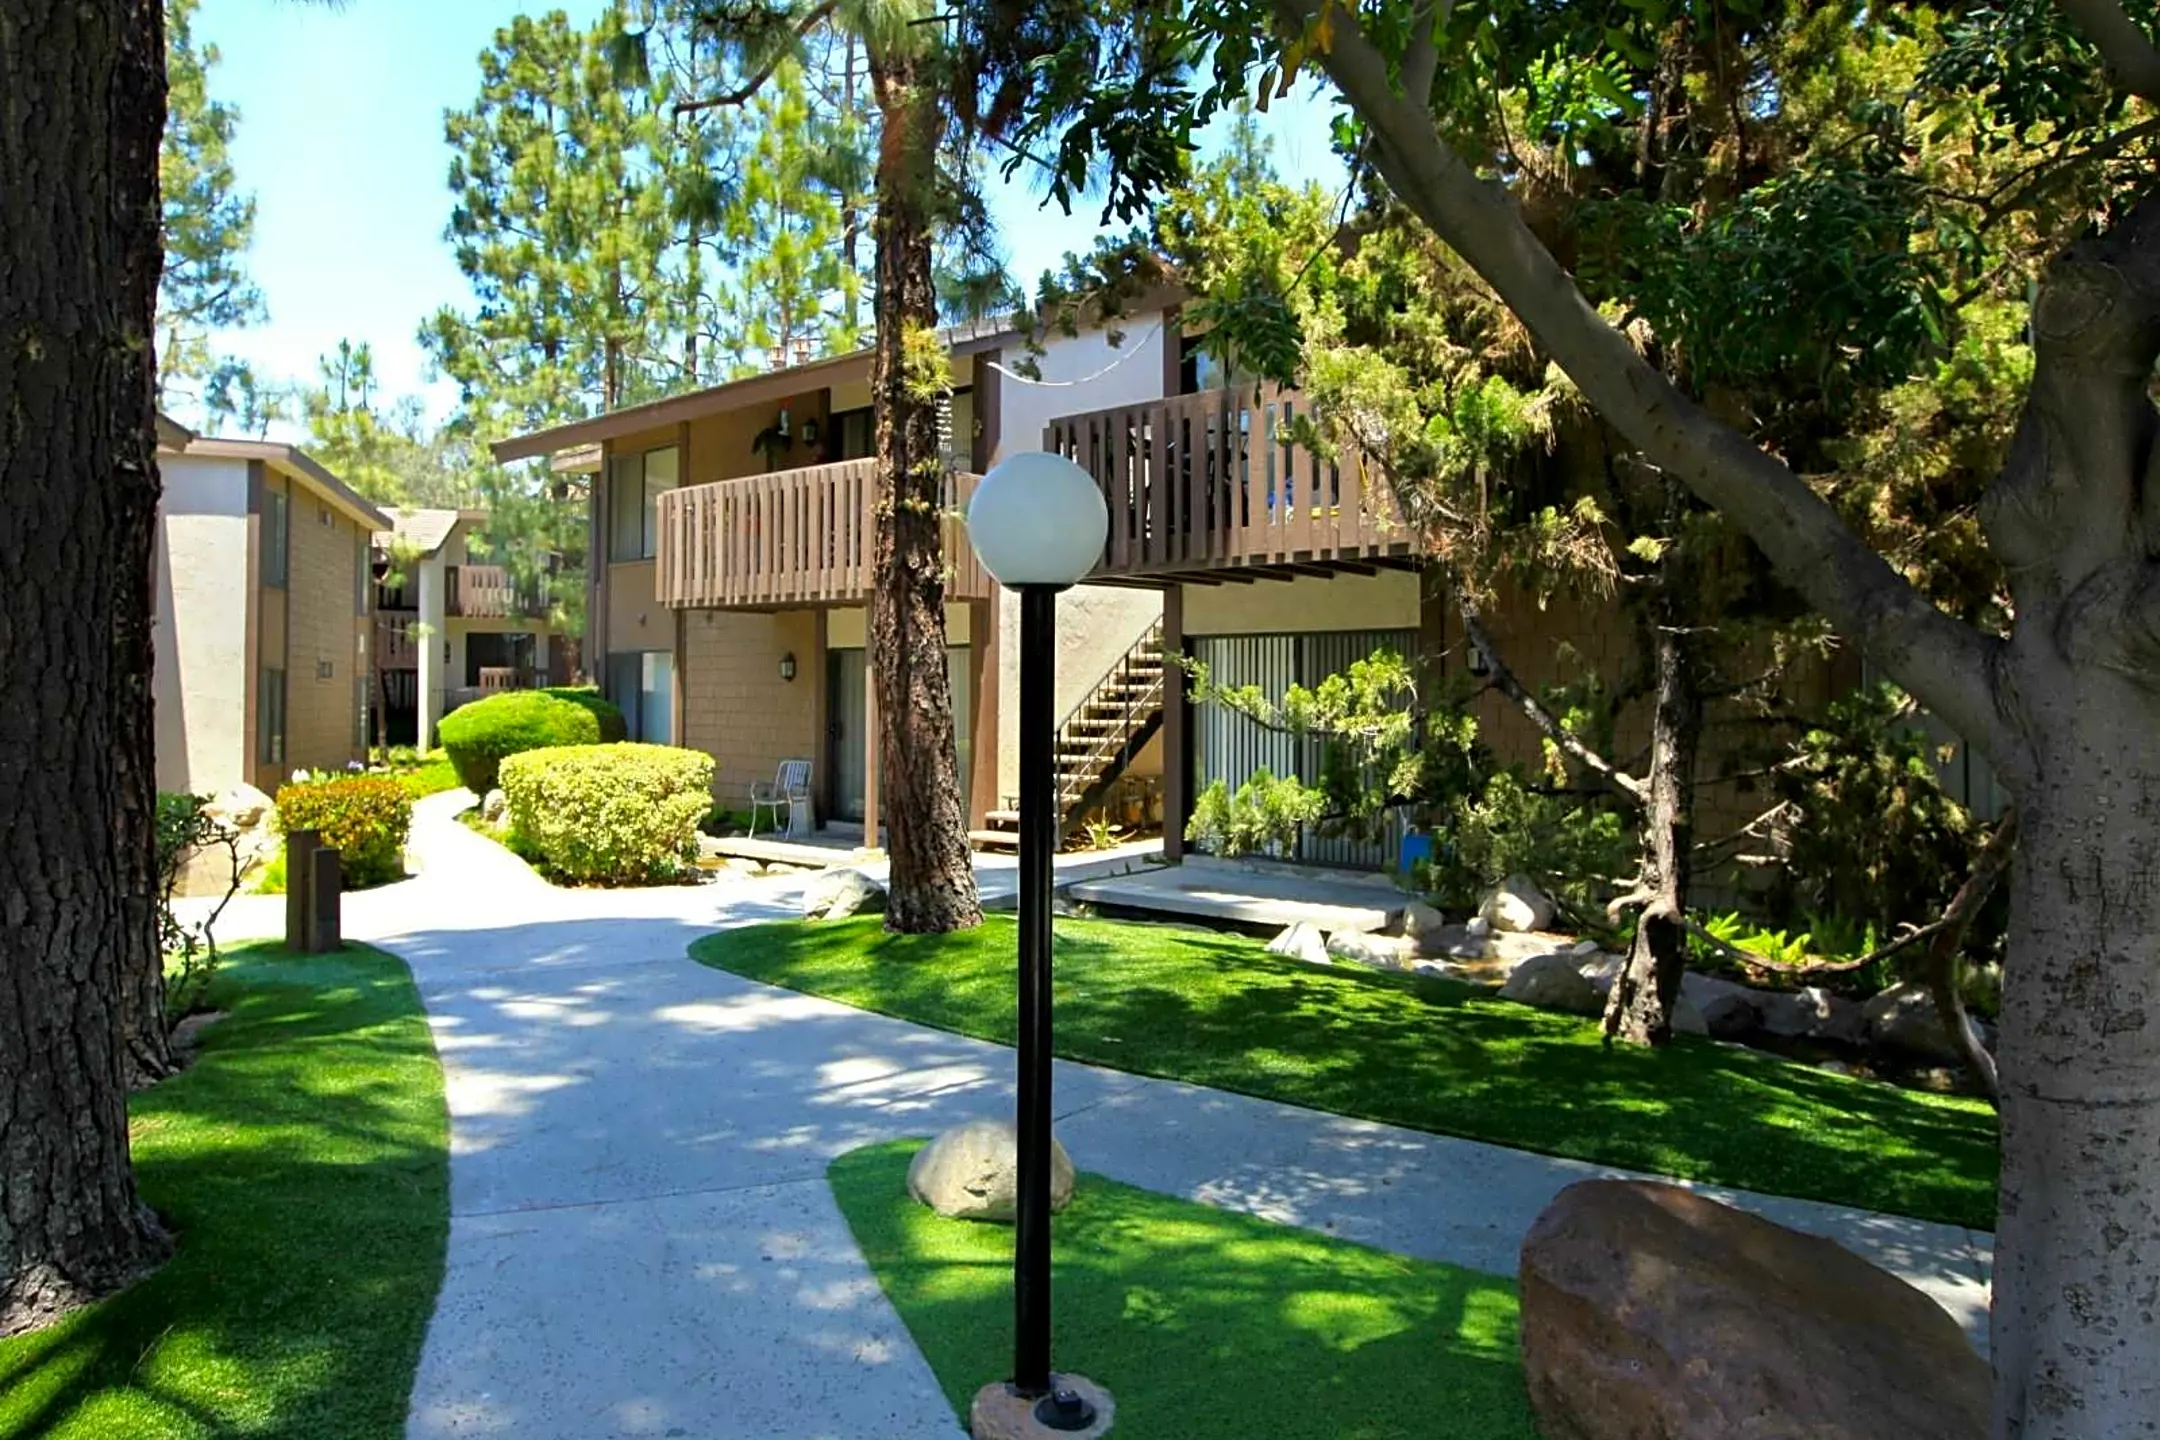 Cherry Creek Apartment Homes - Santa Ana, CA